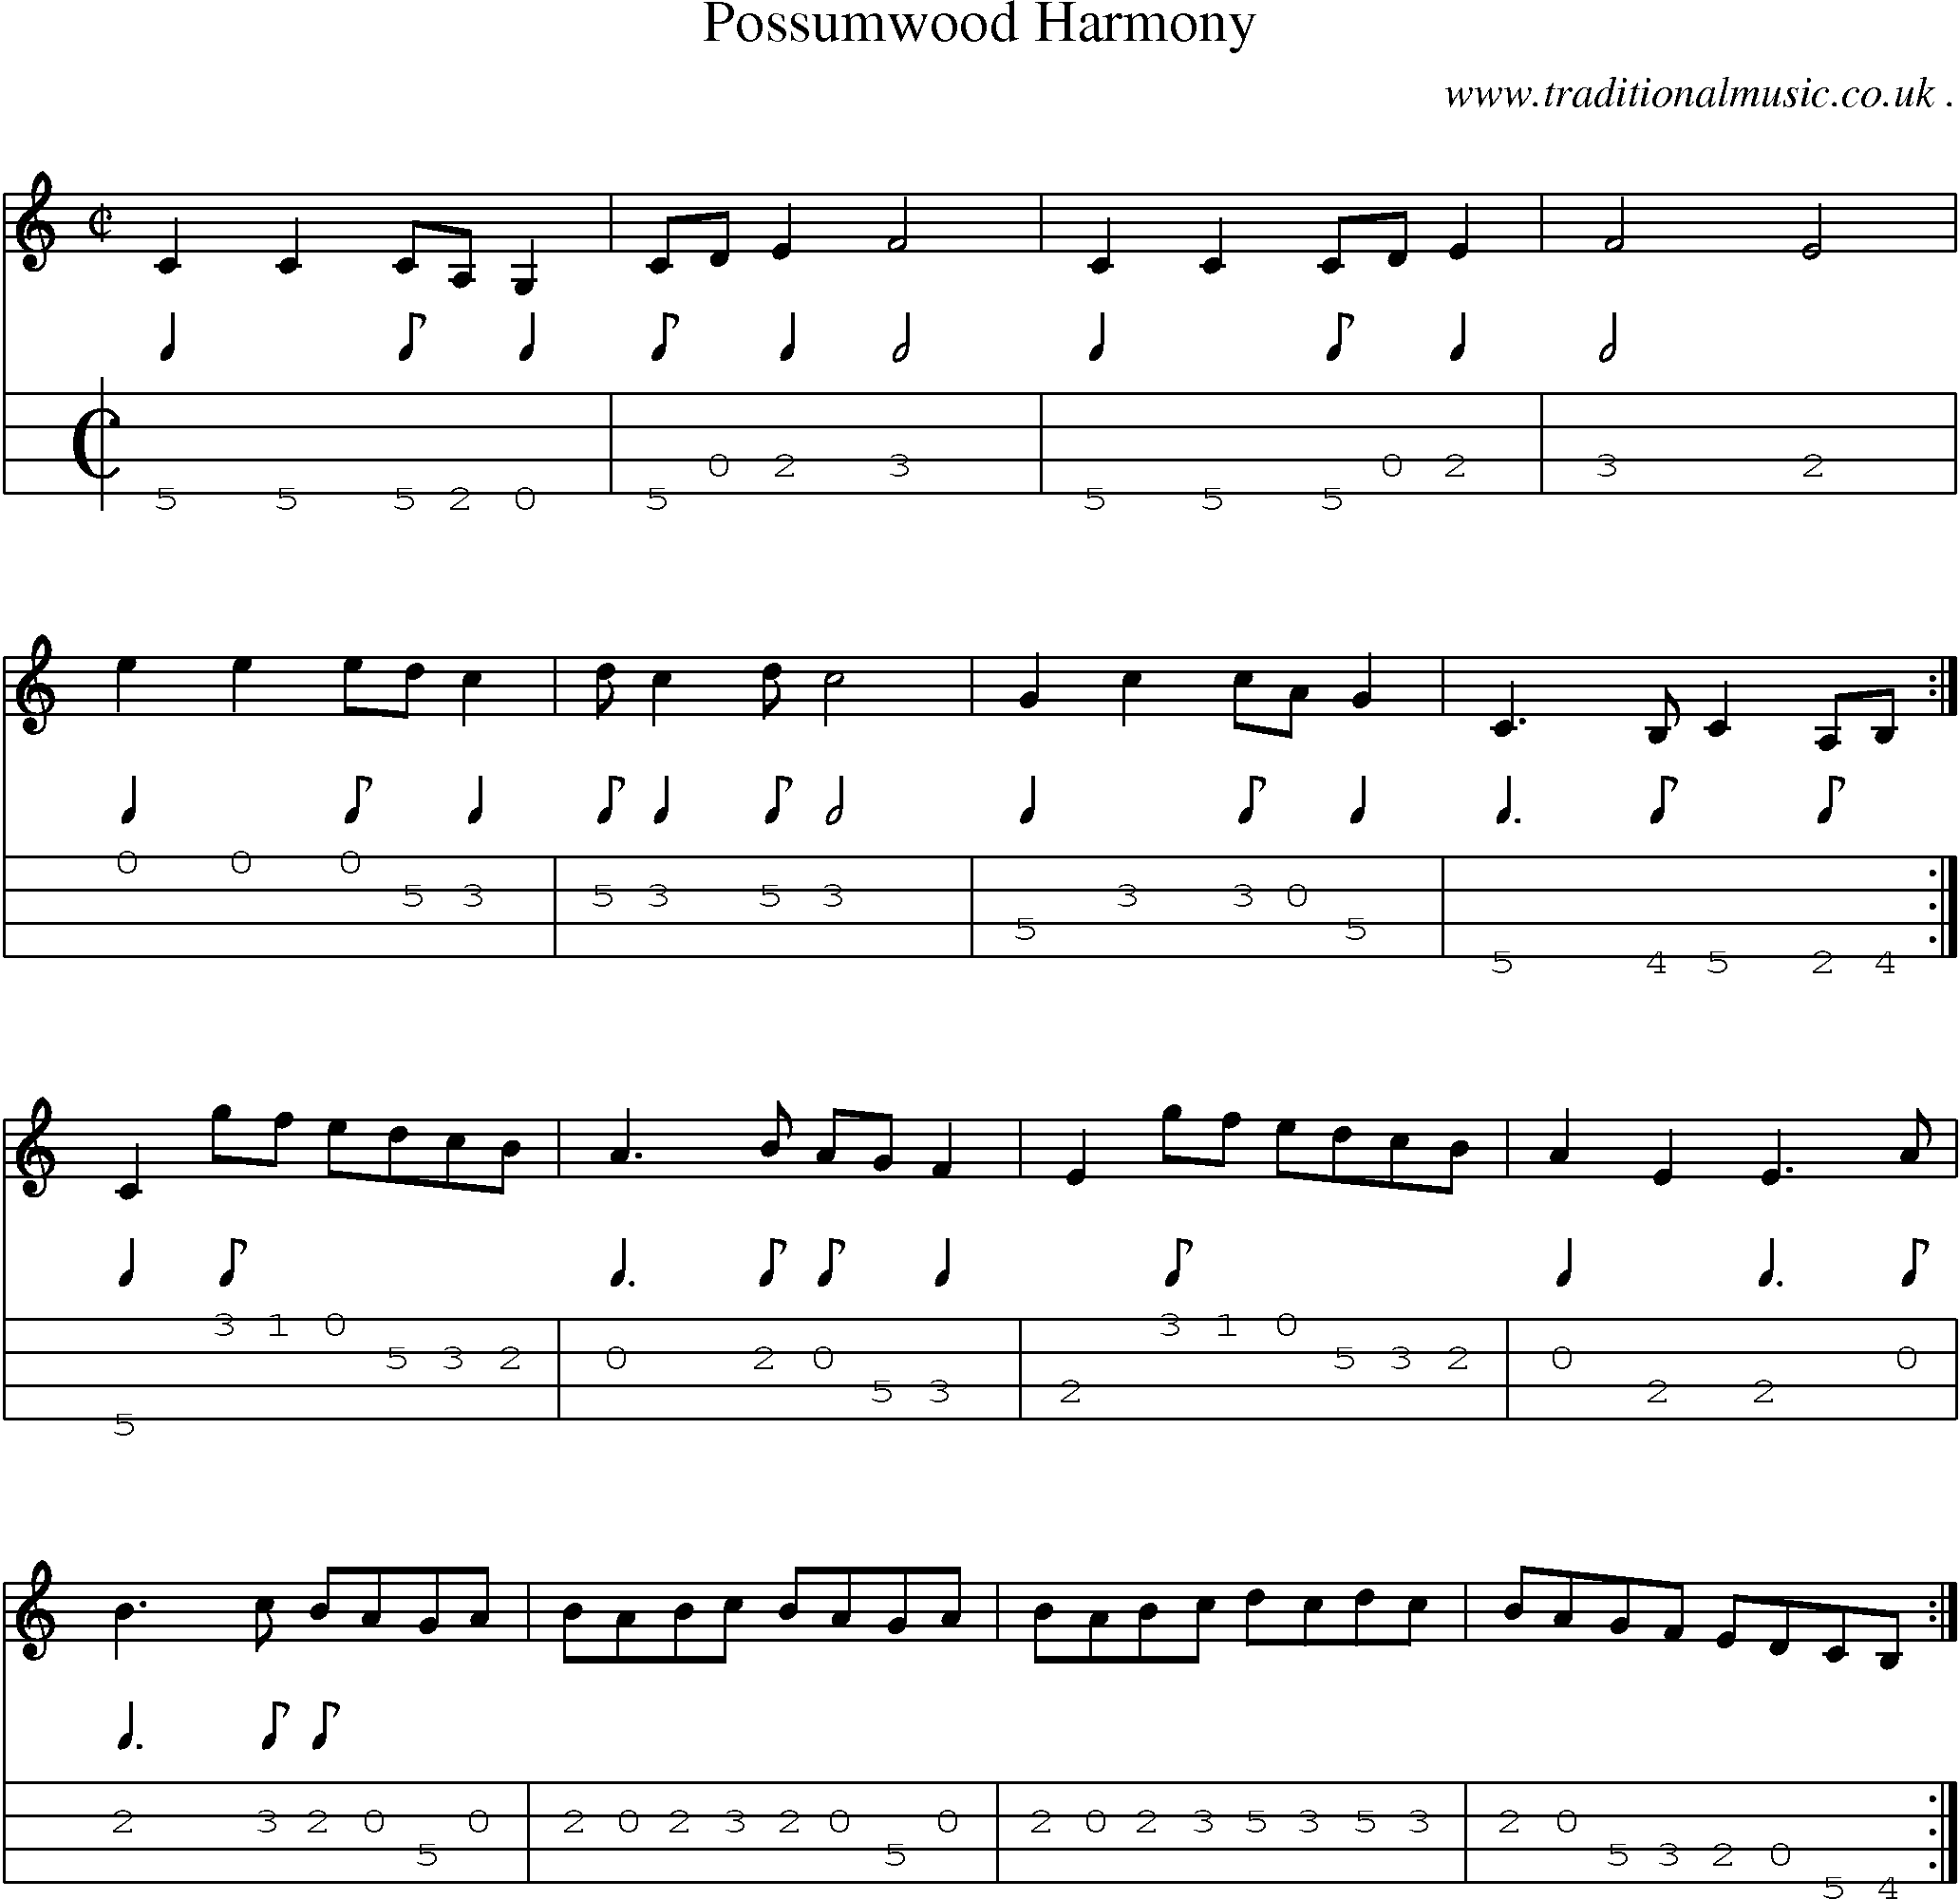 Music Score and Guitar Tabs for Possumwood Harmony